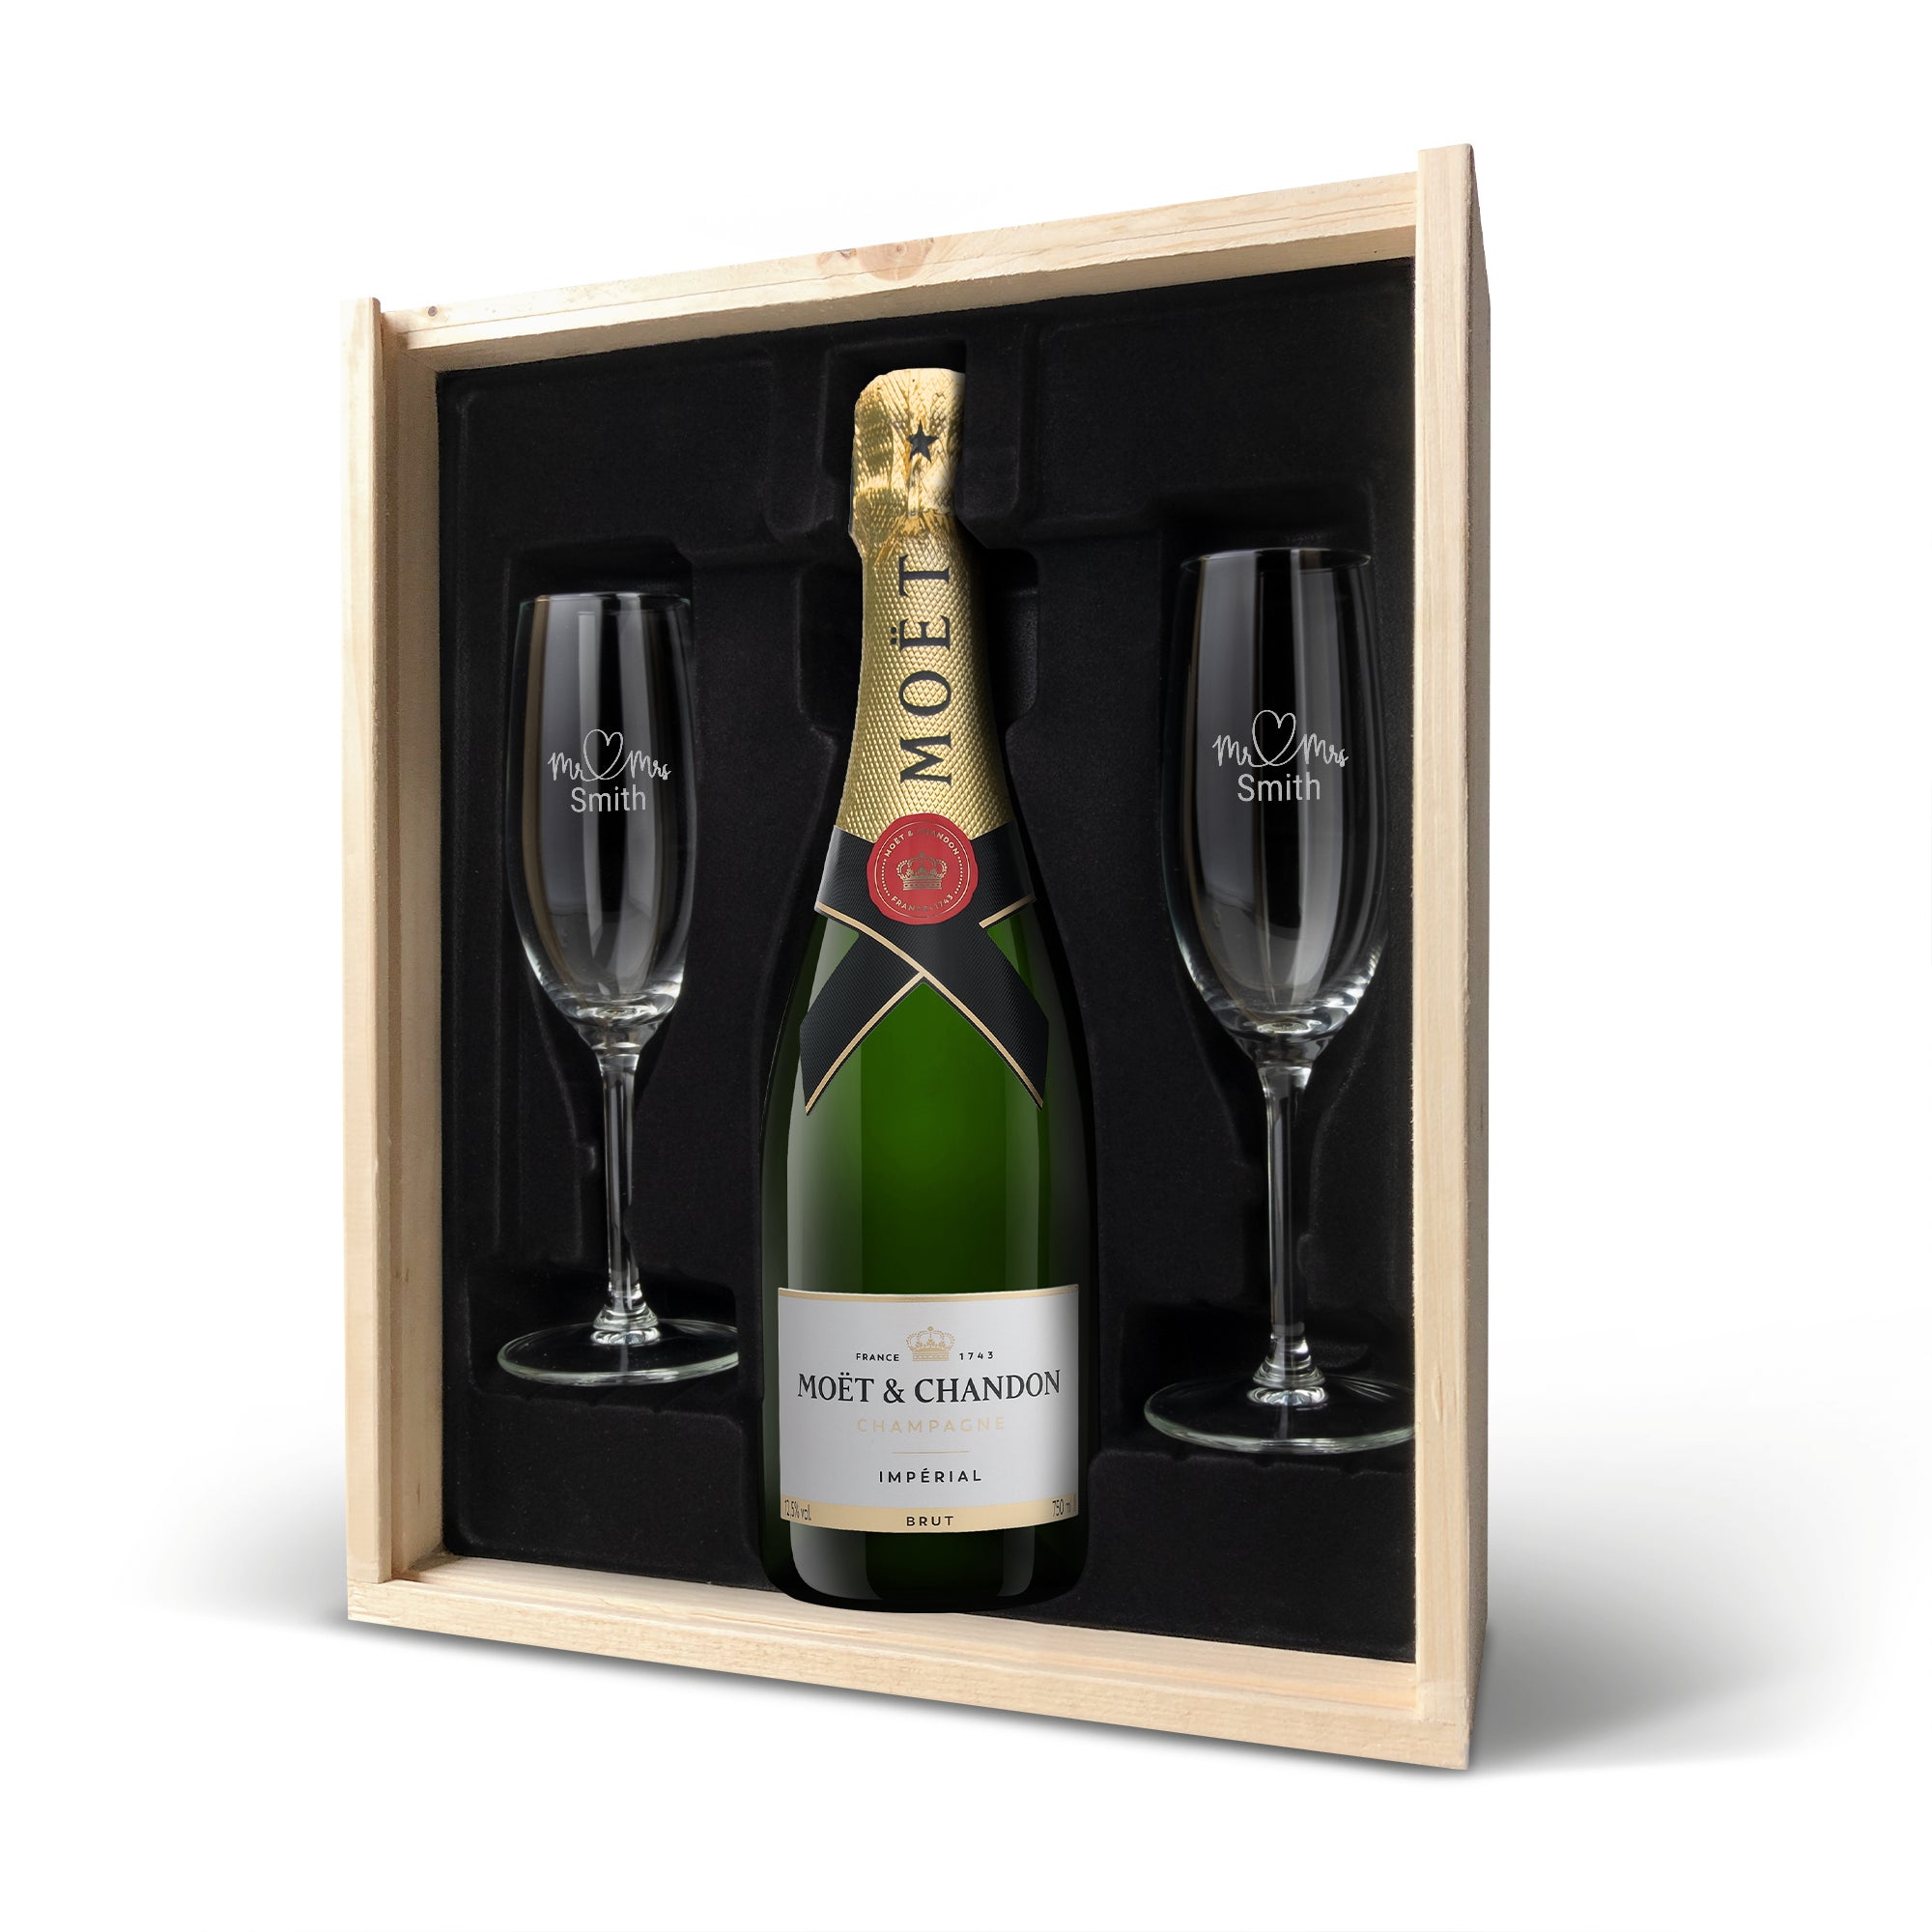 Personalised champagne gift set - Moet et Chandon - Engraved glasses